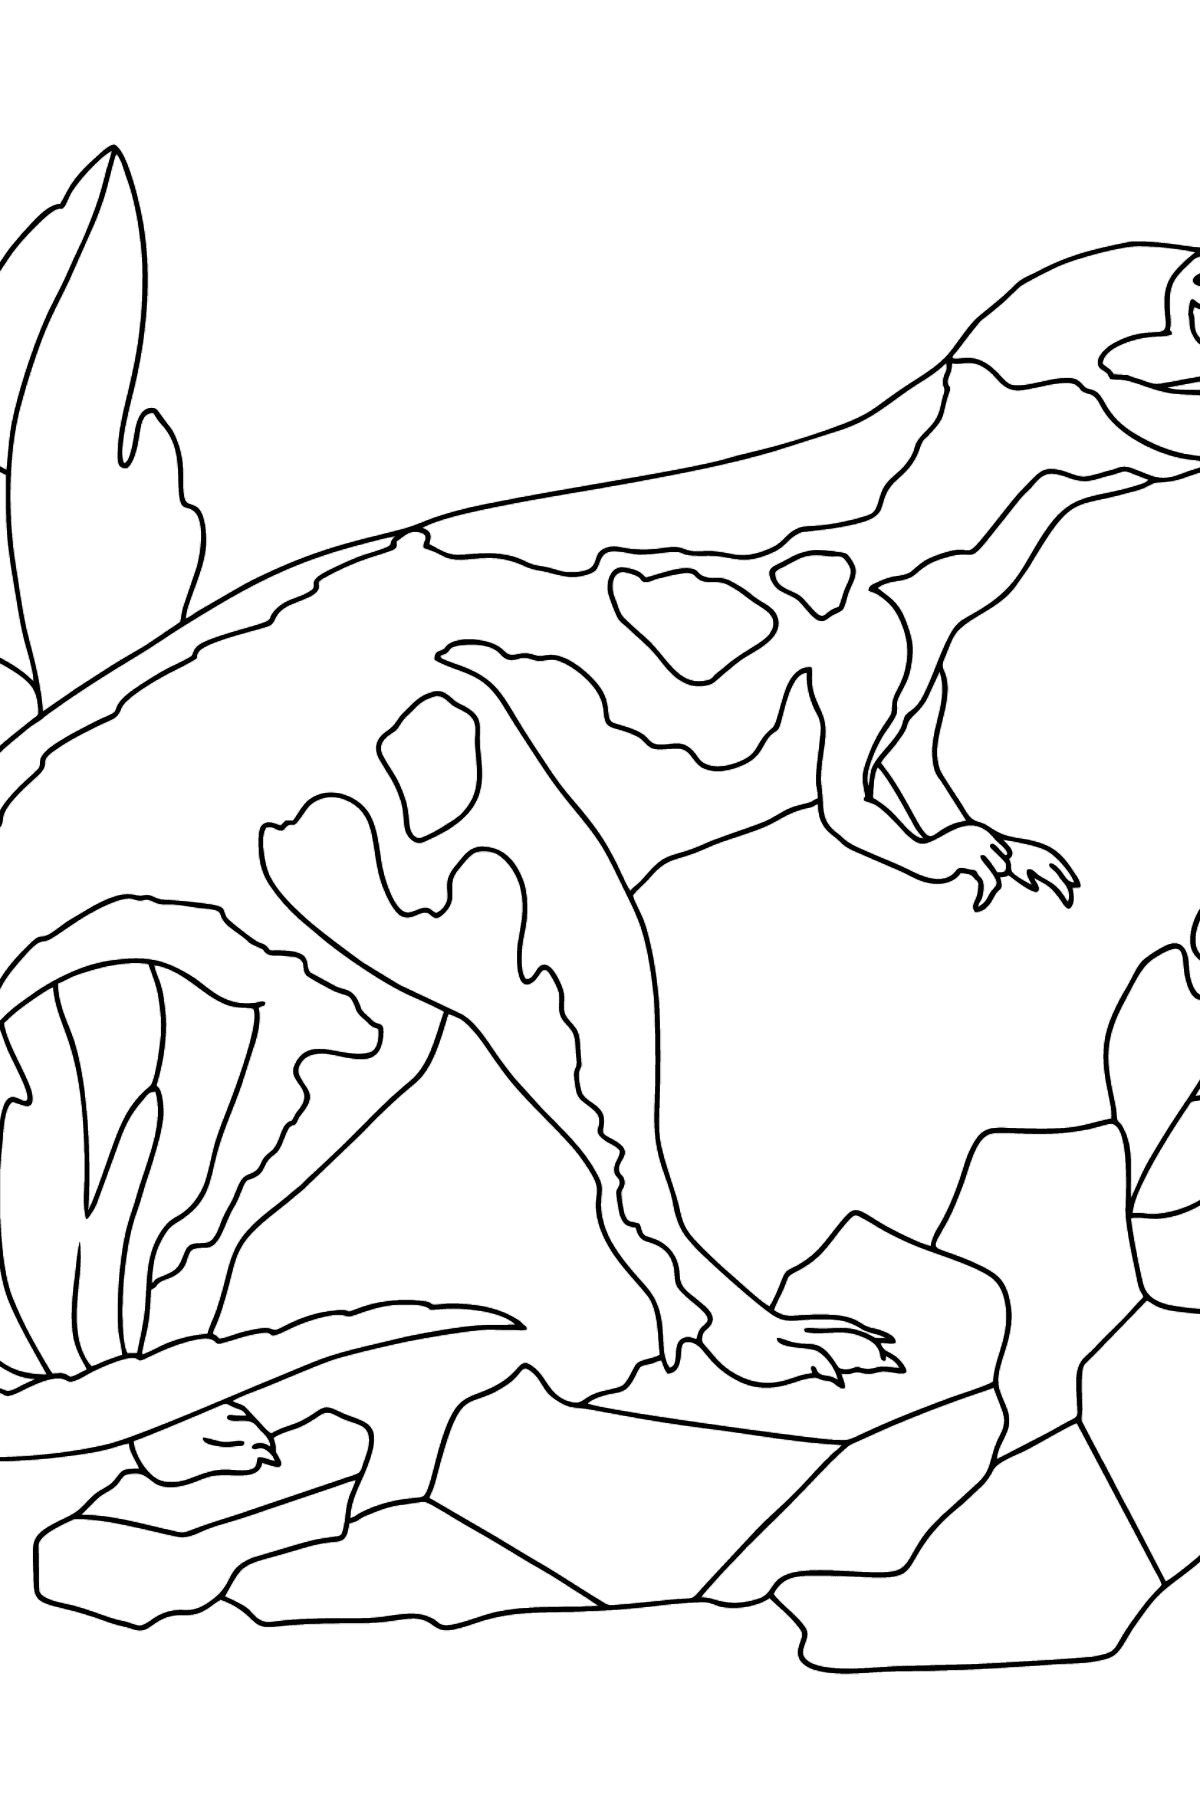 Tegning til fargelegging tyrannosaurus (vanskelig) - Tegninger til fargelegging for barn